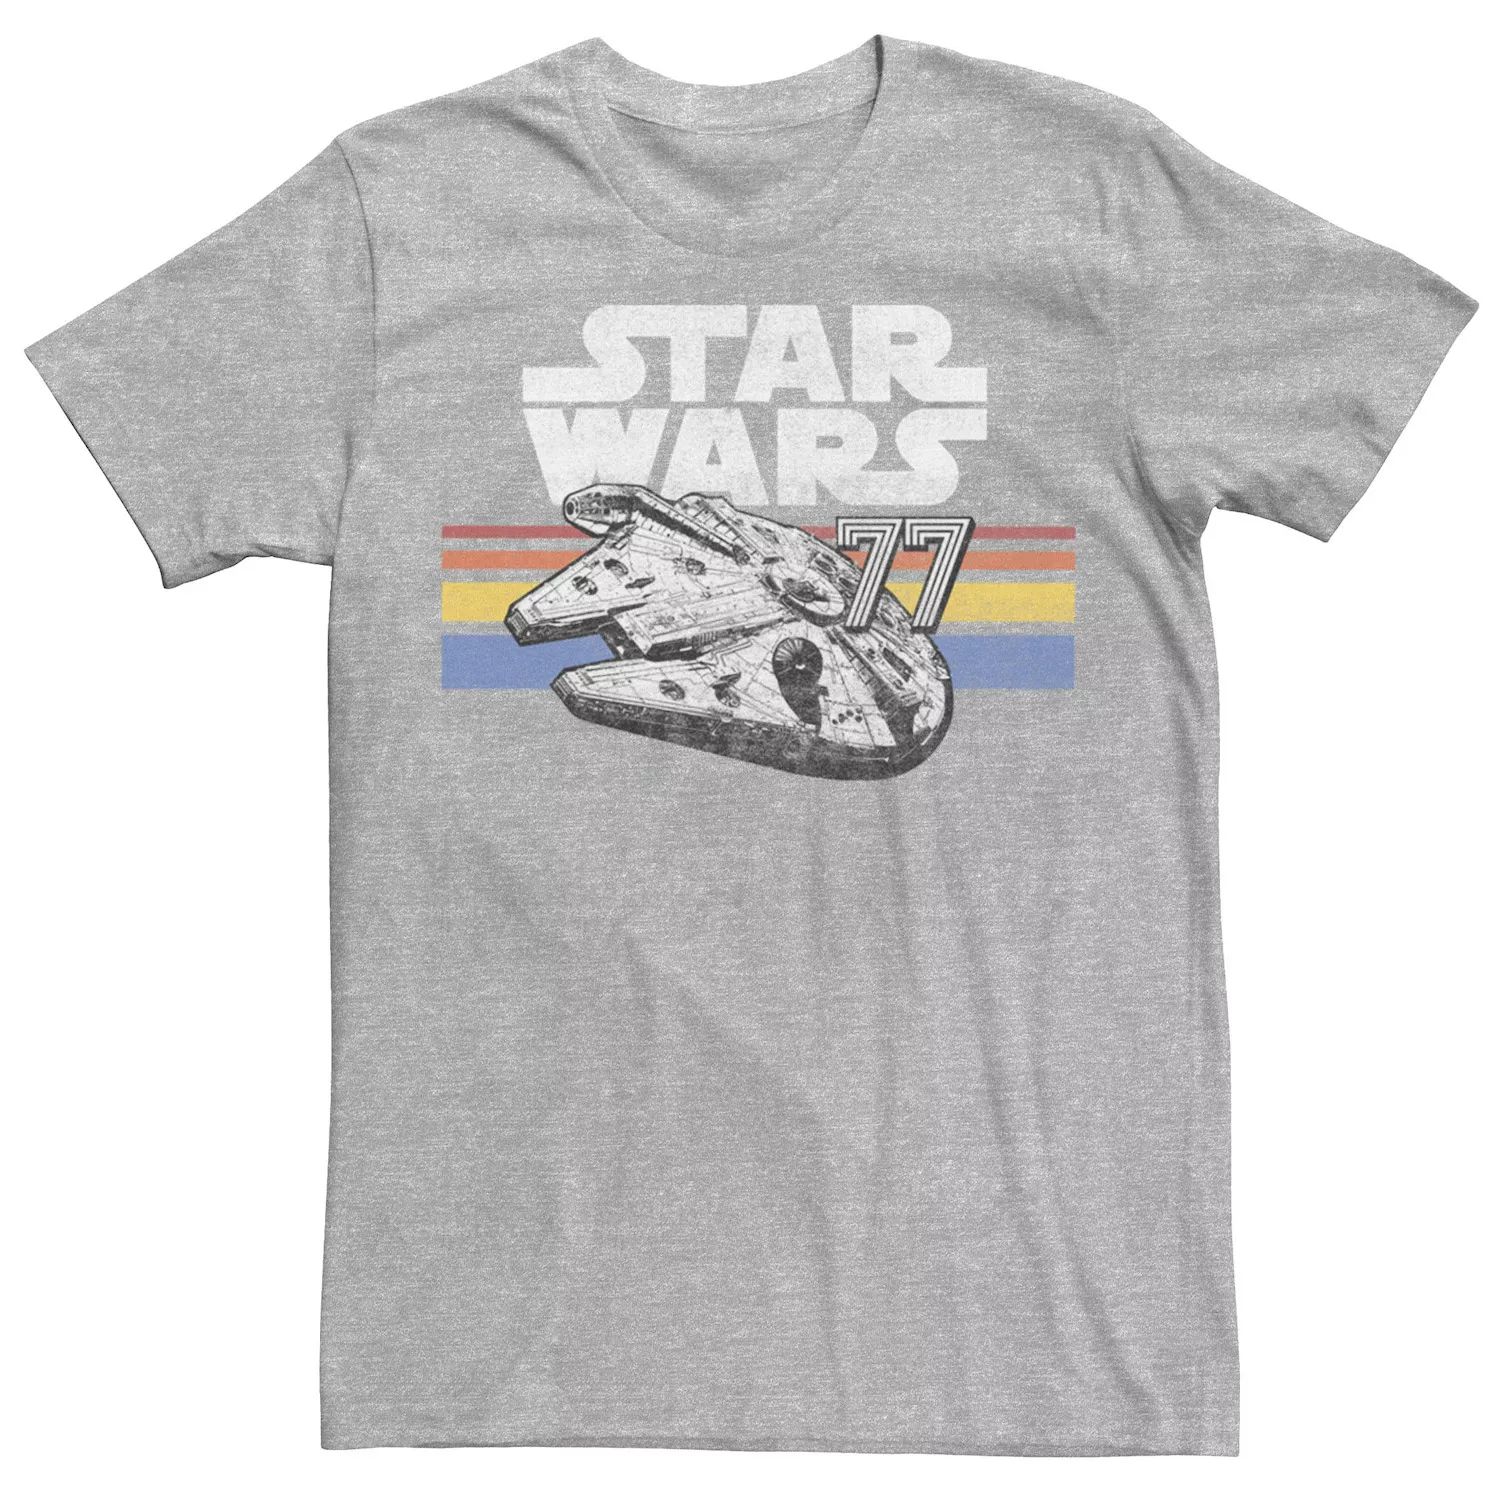 Мужская футболка с логотипом Star Wars Millennium Falcon 77 Retro Lines